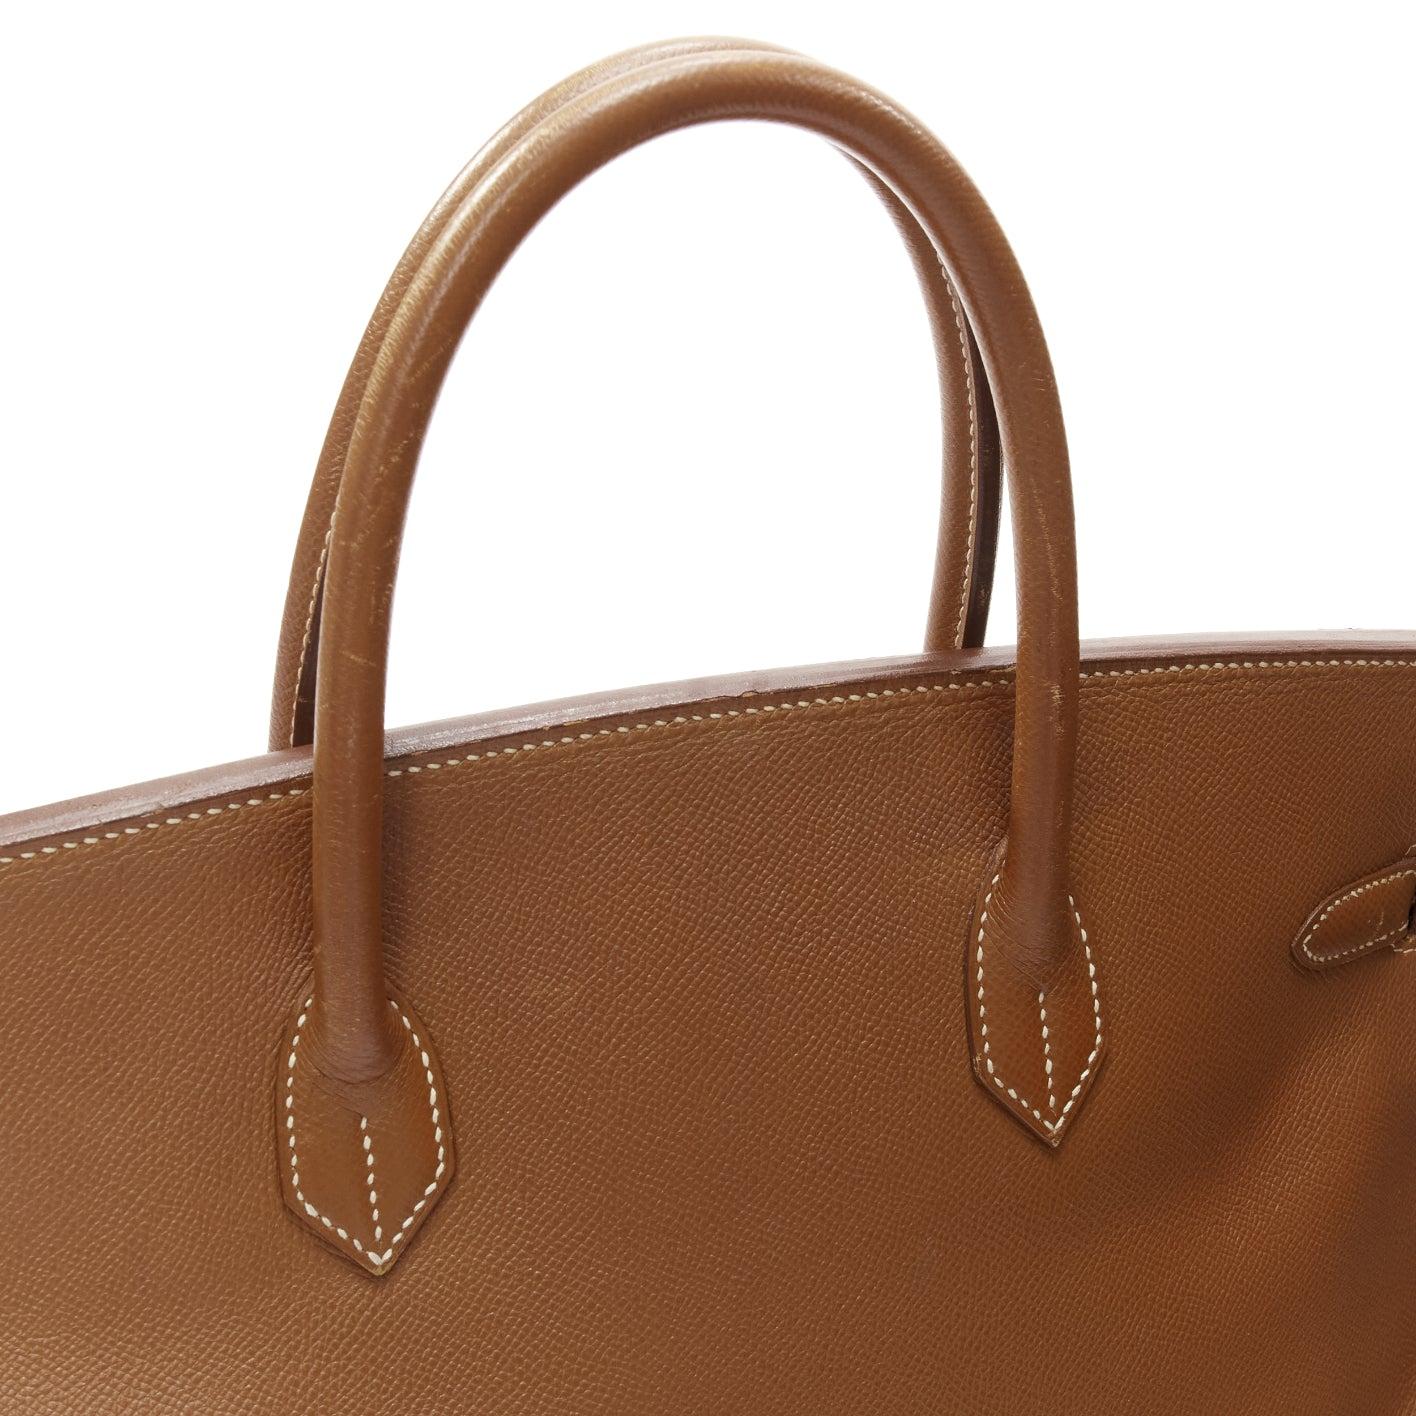 HERMES Birkin 40 Epsom brown leather gold hardware leather tote bag For Sale 5